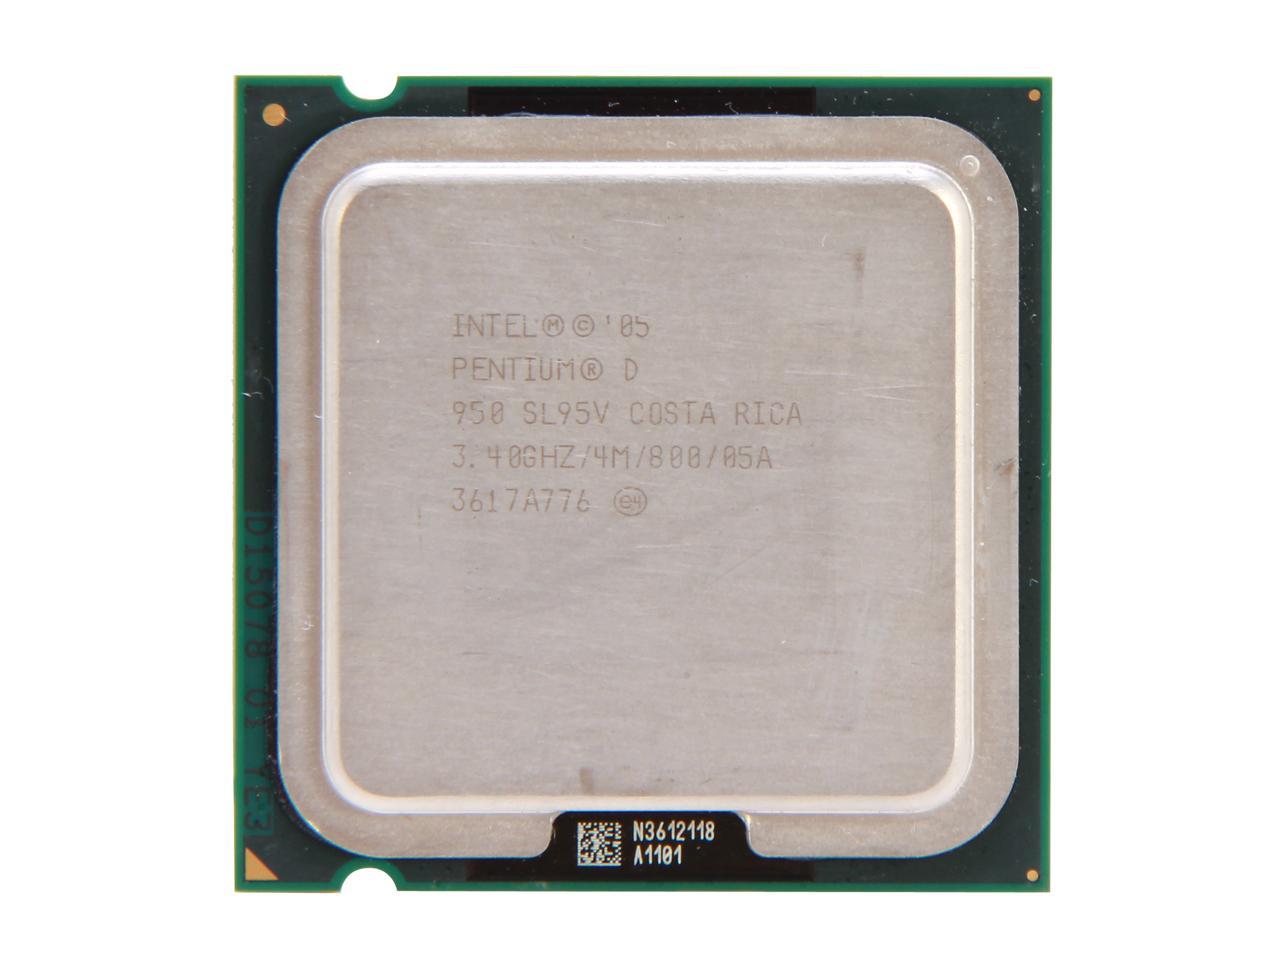 Succesvol bros Armstrong Refurbished: Intel Pentium D 950 - Pentium D Presler Dual-Core 3.4 GHz LGA  775 Desktop Processor - SL95V - Newegg.com